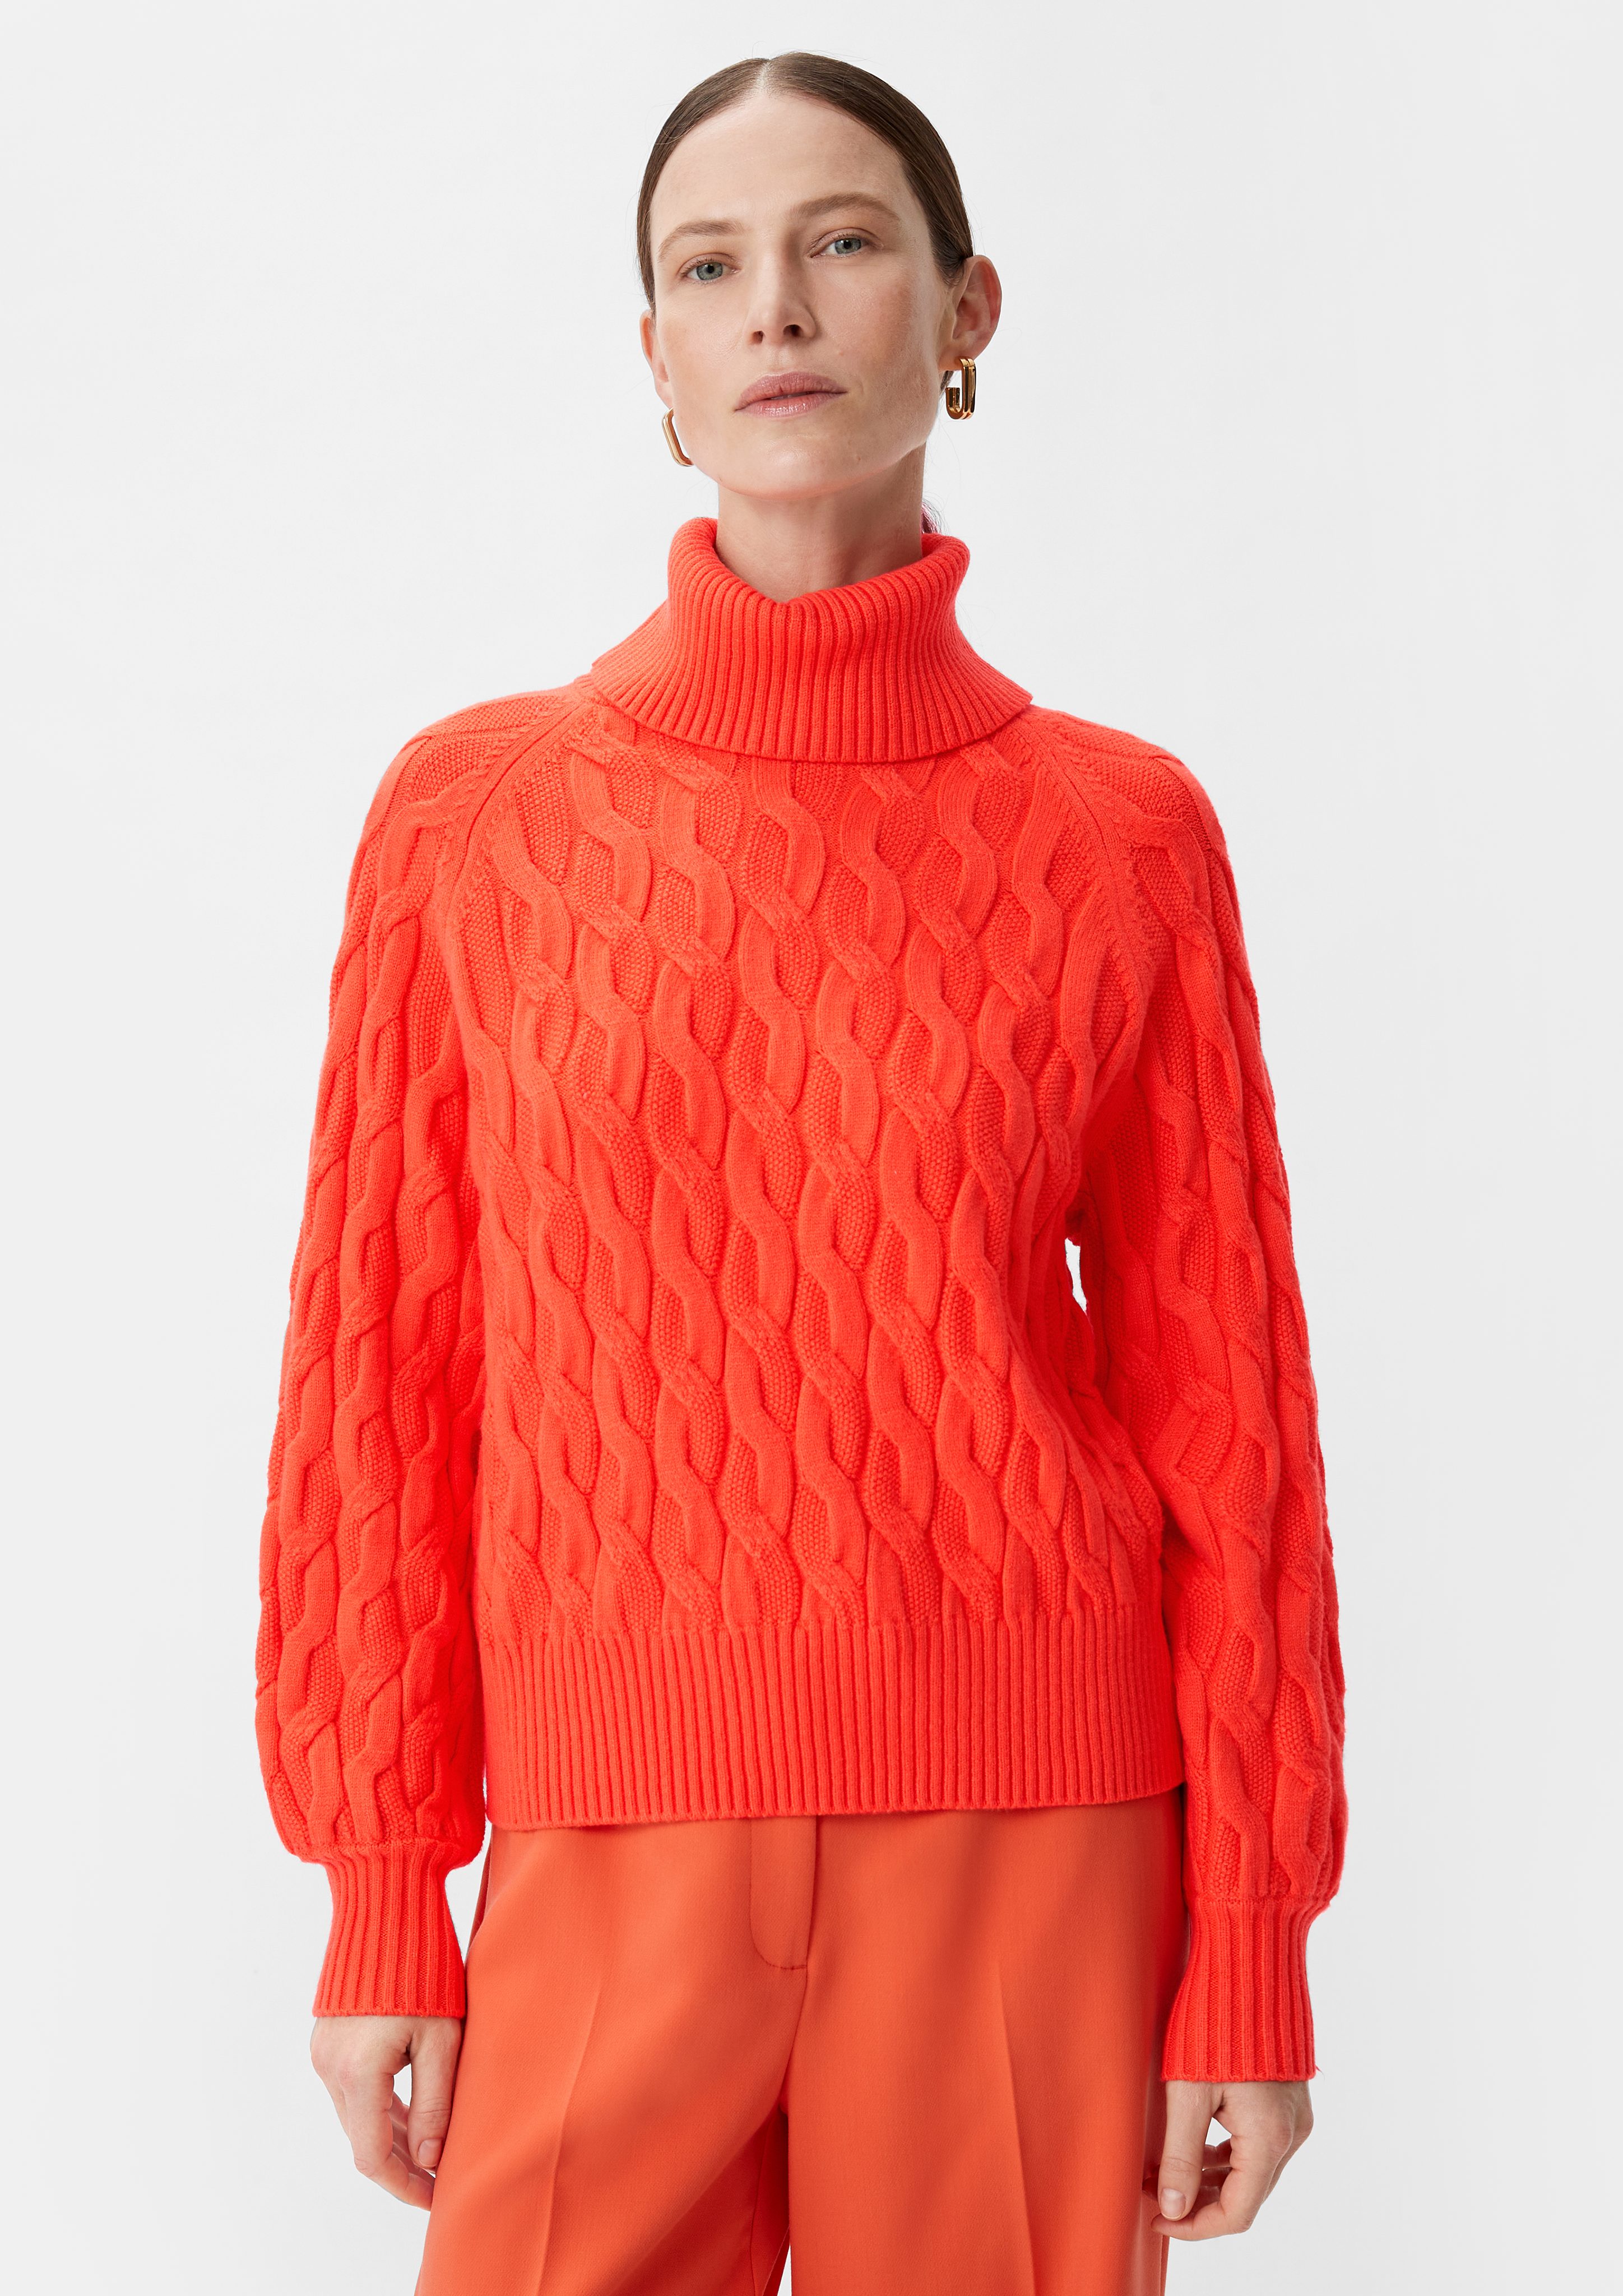 Comma Strickmuster mit orange Langarmshirt Pullover